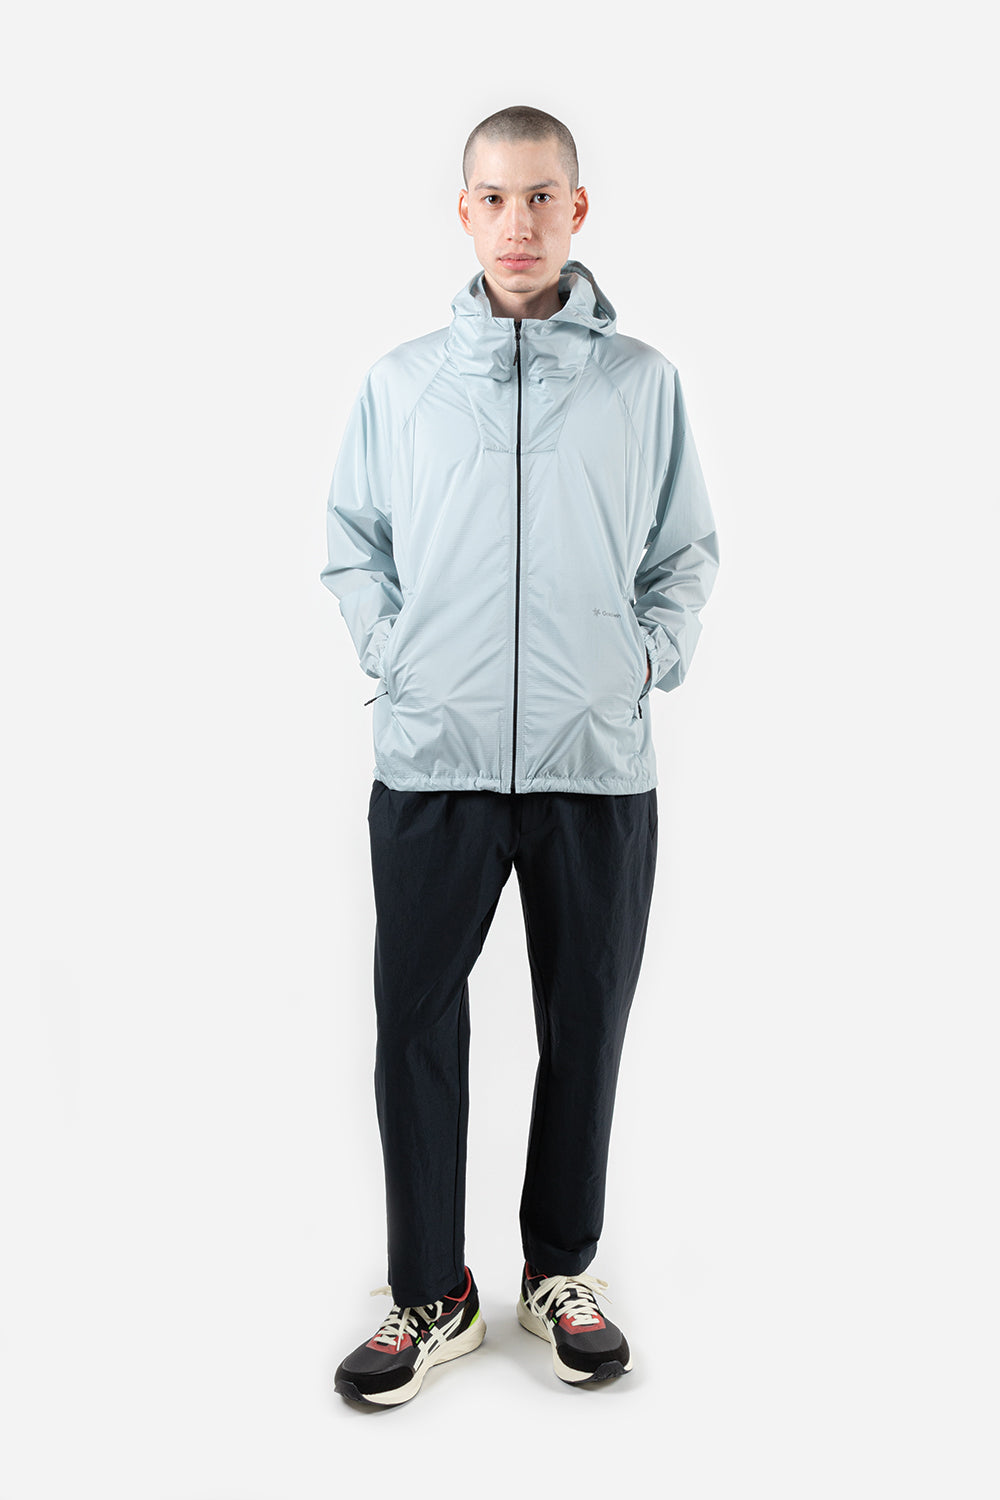 Versatile W-Cloth Jacket - Vapor Gray